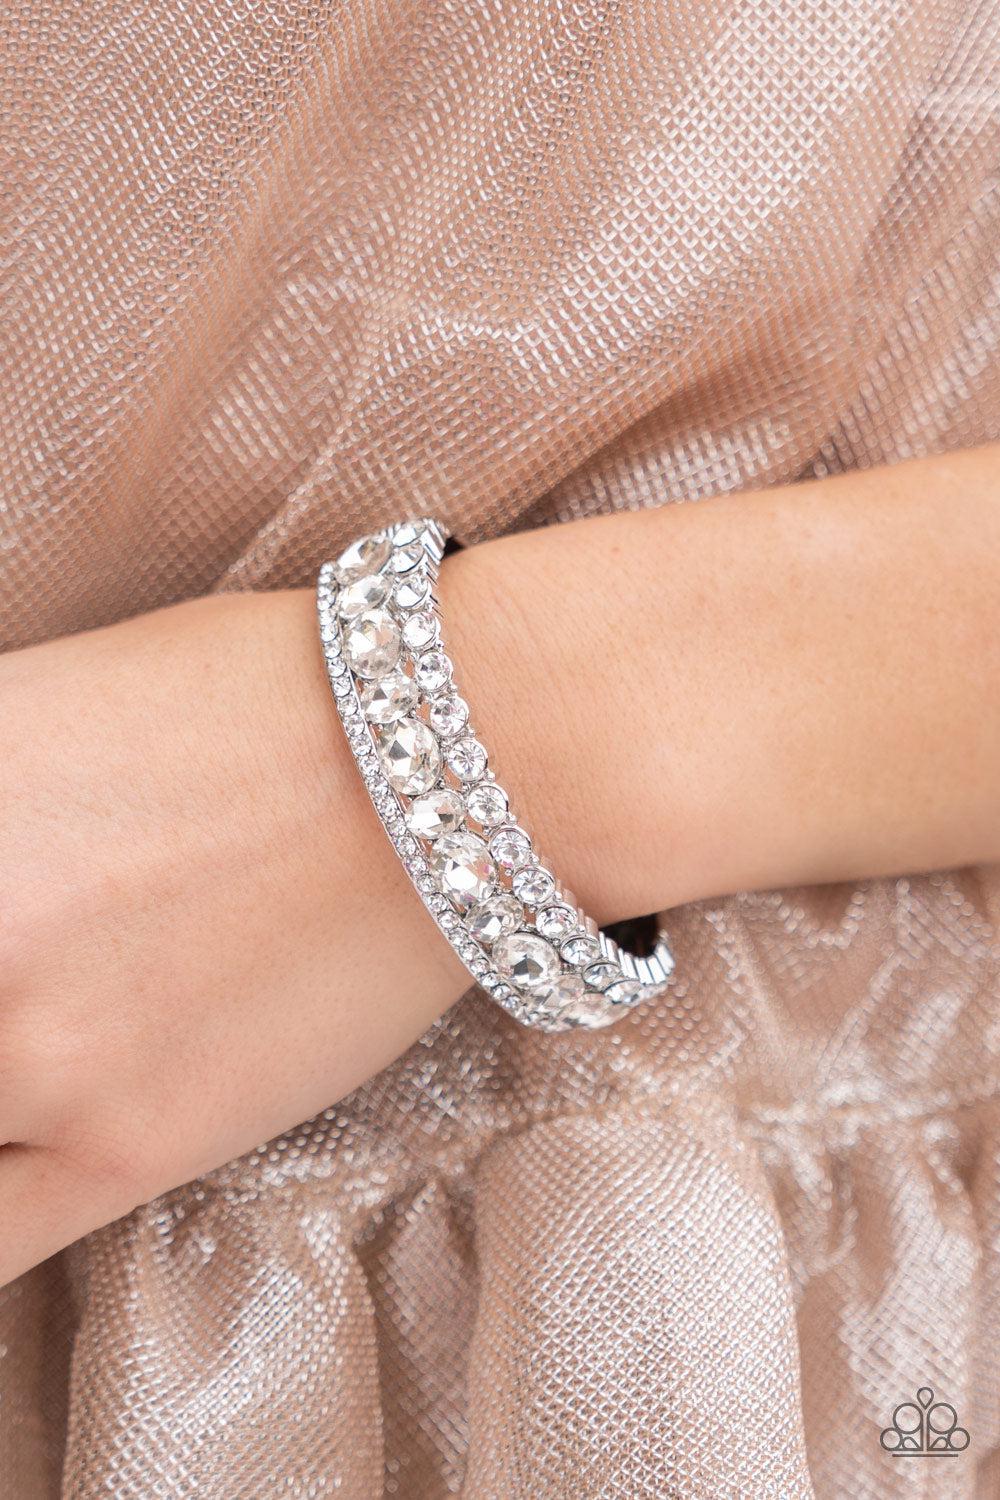 Mega Megawatt White Rhinestone Bracelet - Paparazzi Accessories- on model - CarasShop.com - $5 Jewelry by Cara Jewels